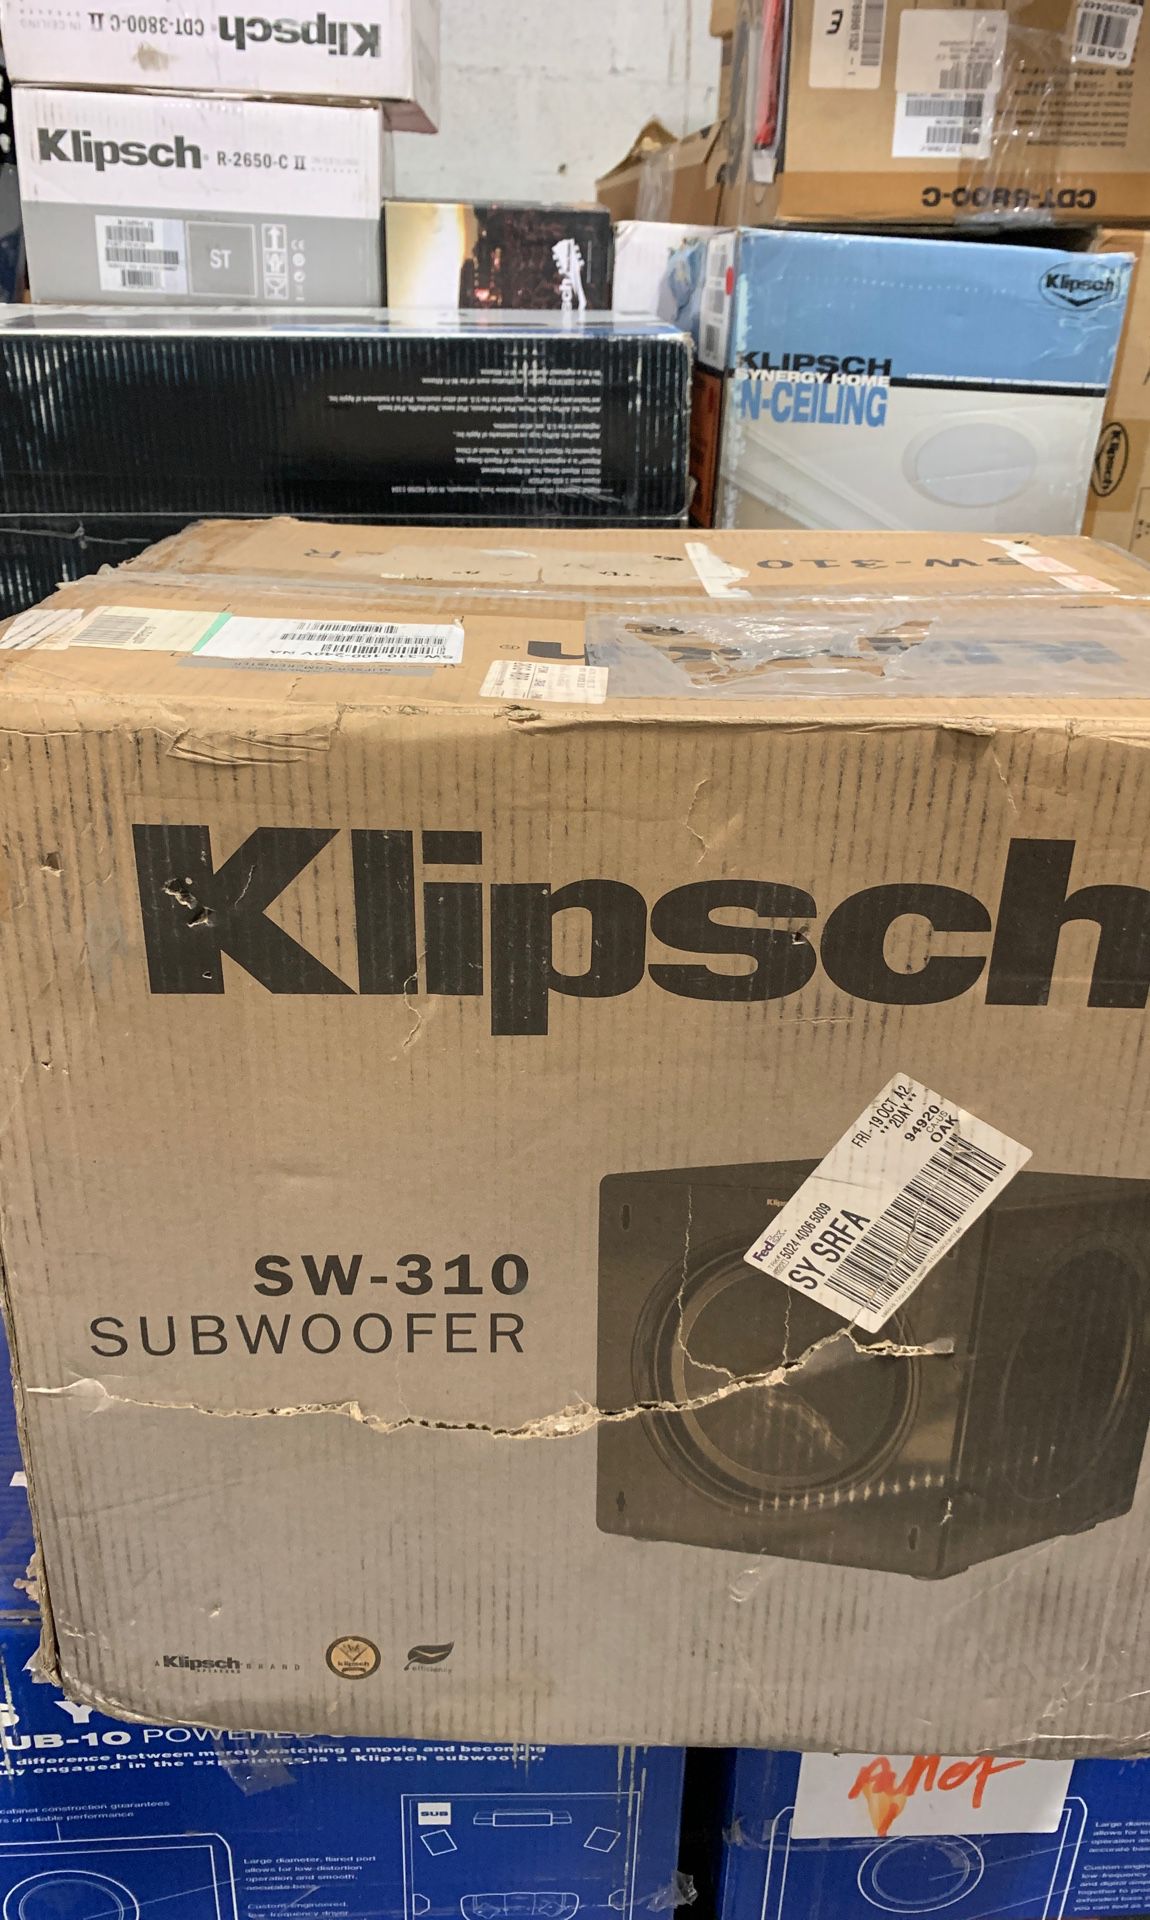 Klipsch Subwoofer SW-310 open box